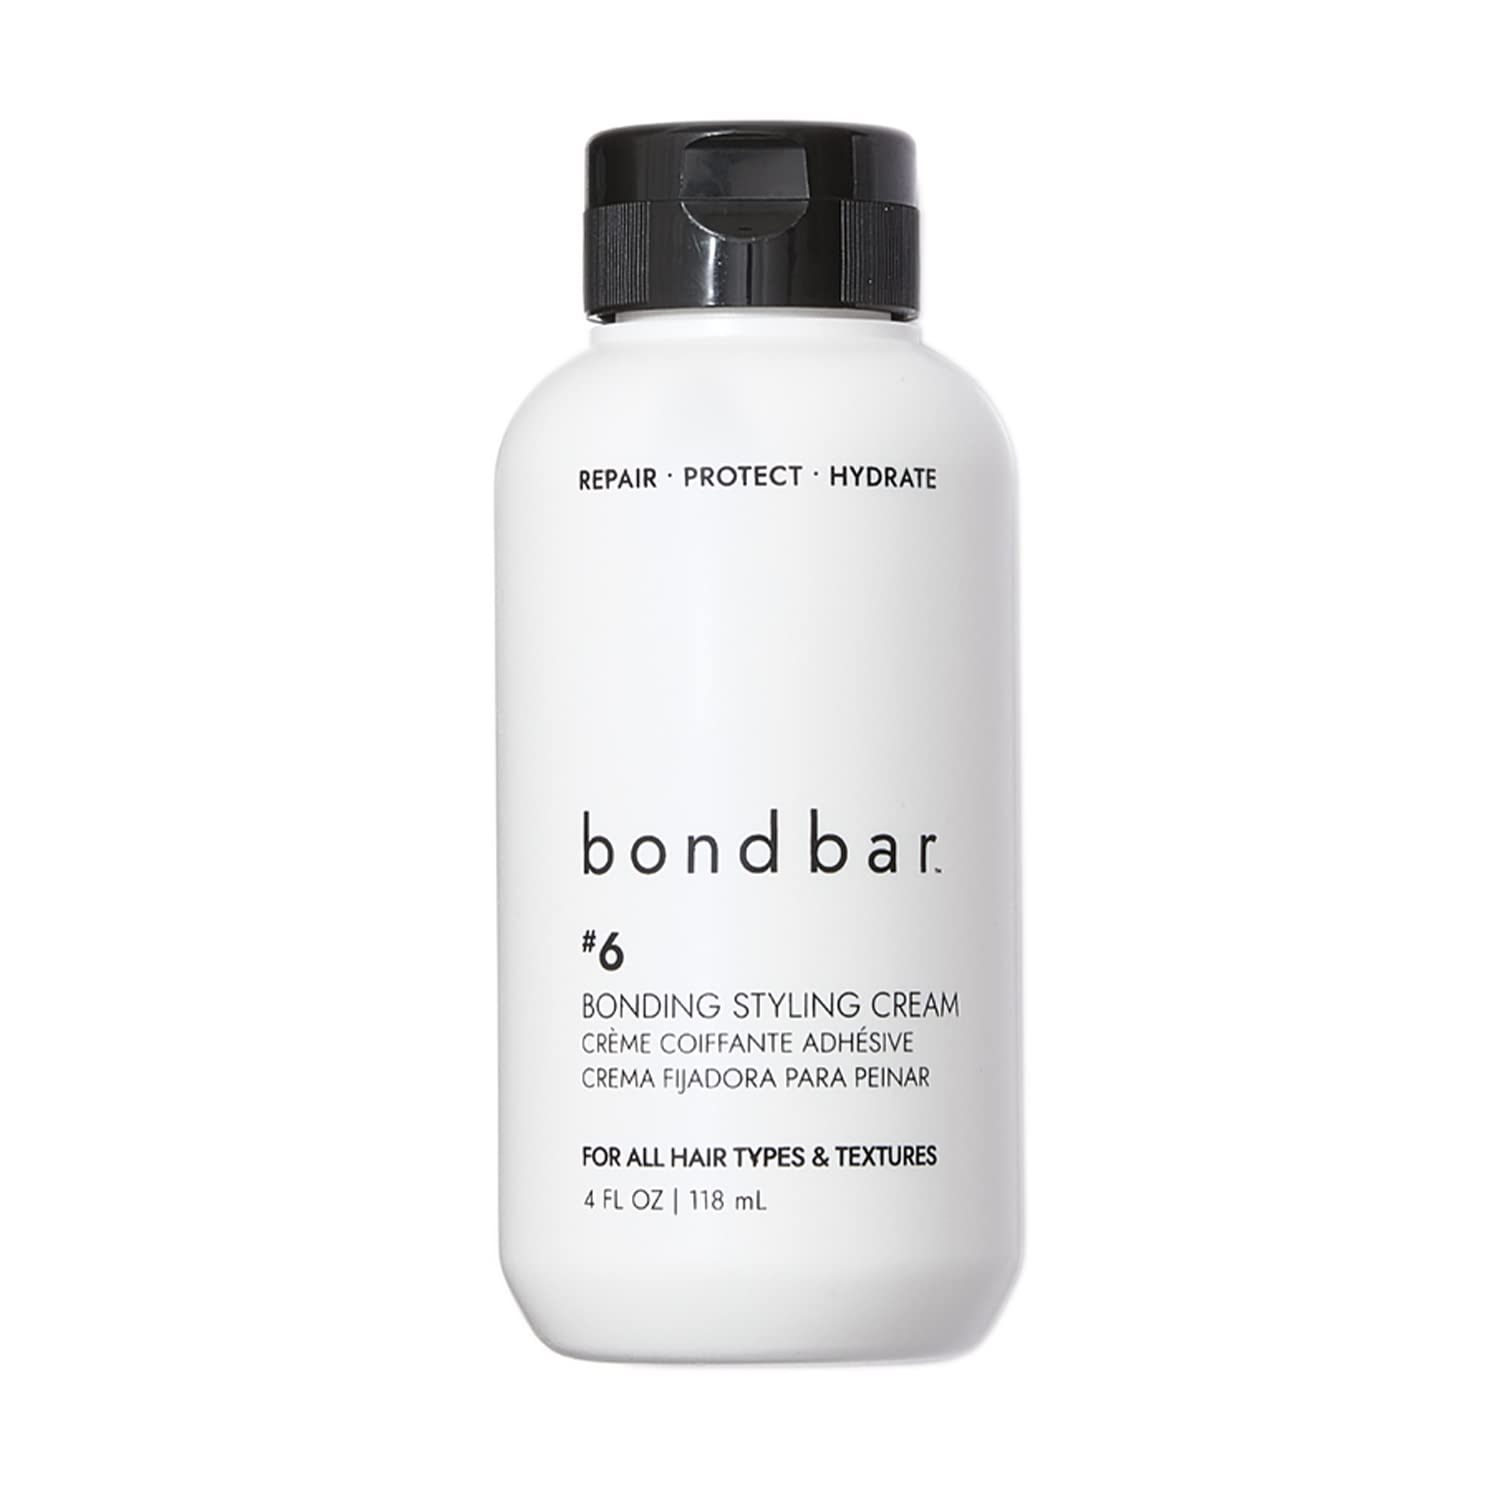 Bondbar Styling Cream for Damaged Hair, Smooths, Strengthens, Repairs all Hair Types & Textures, Vegan, Cruelty-Free, 4 Fl. Oz.